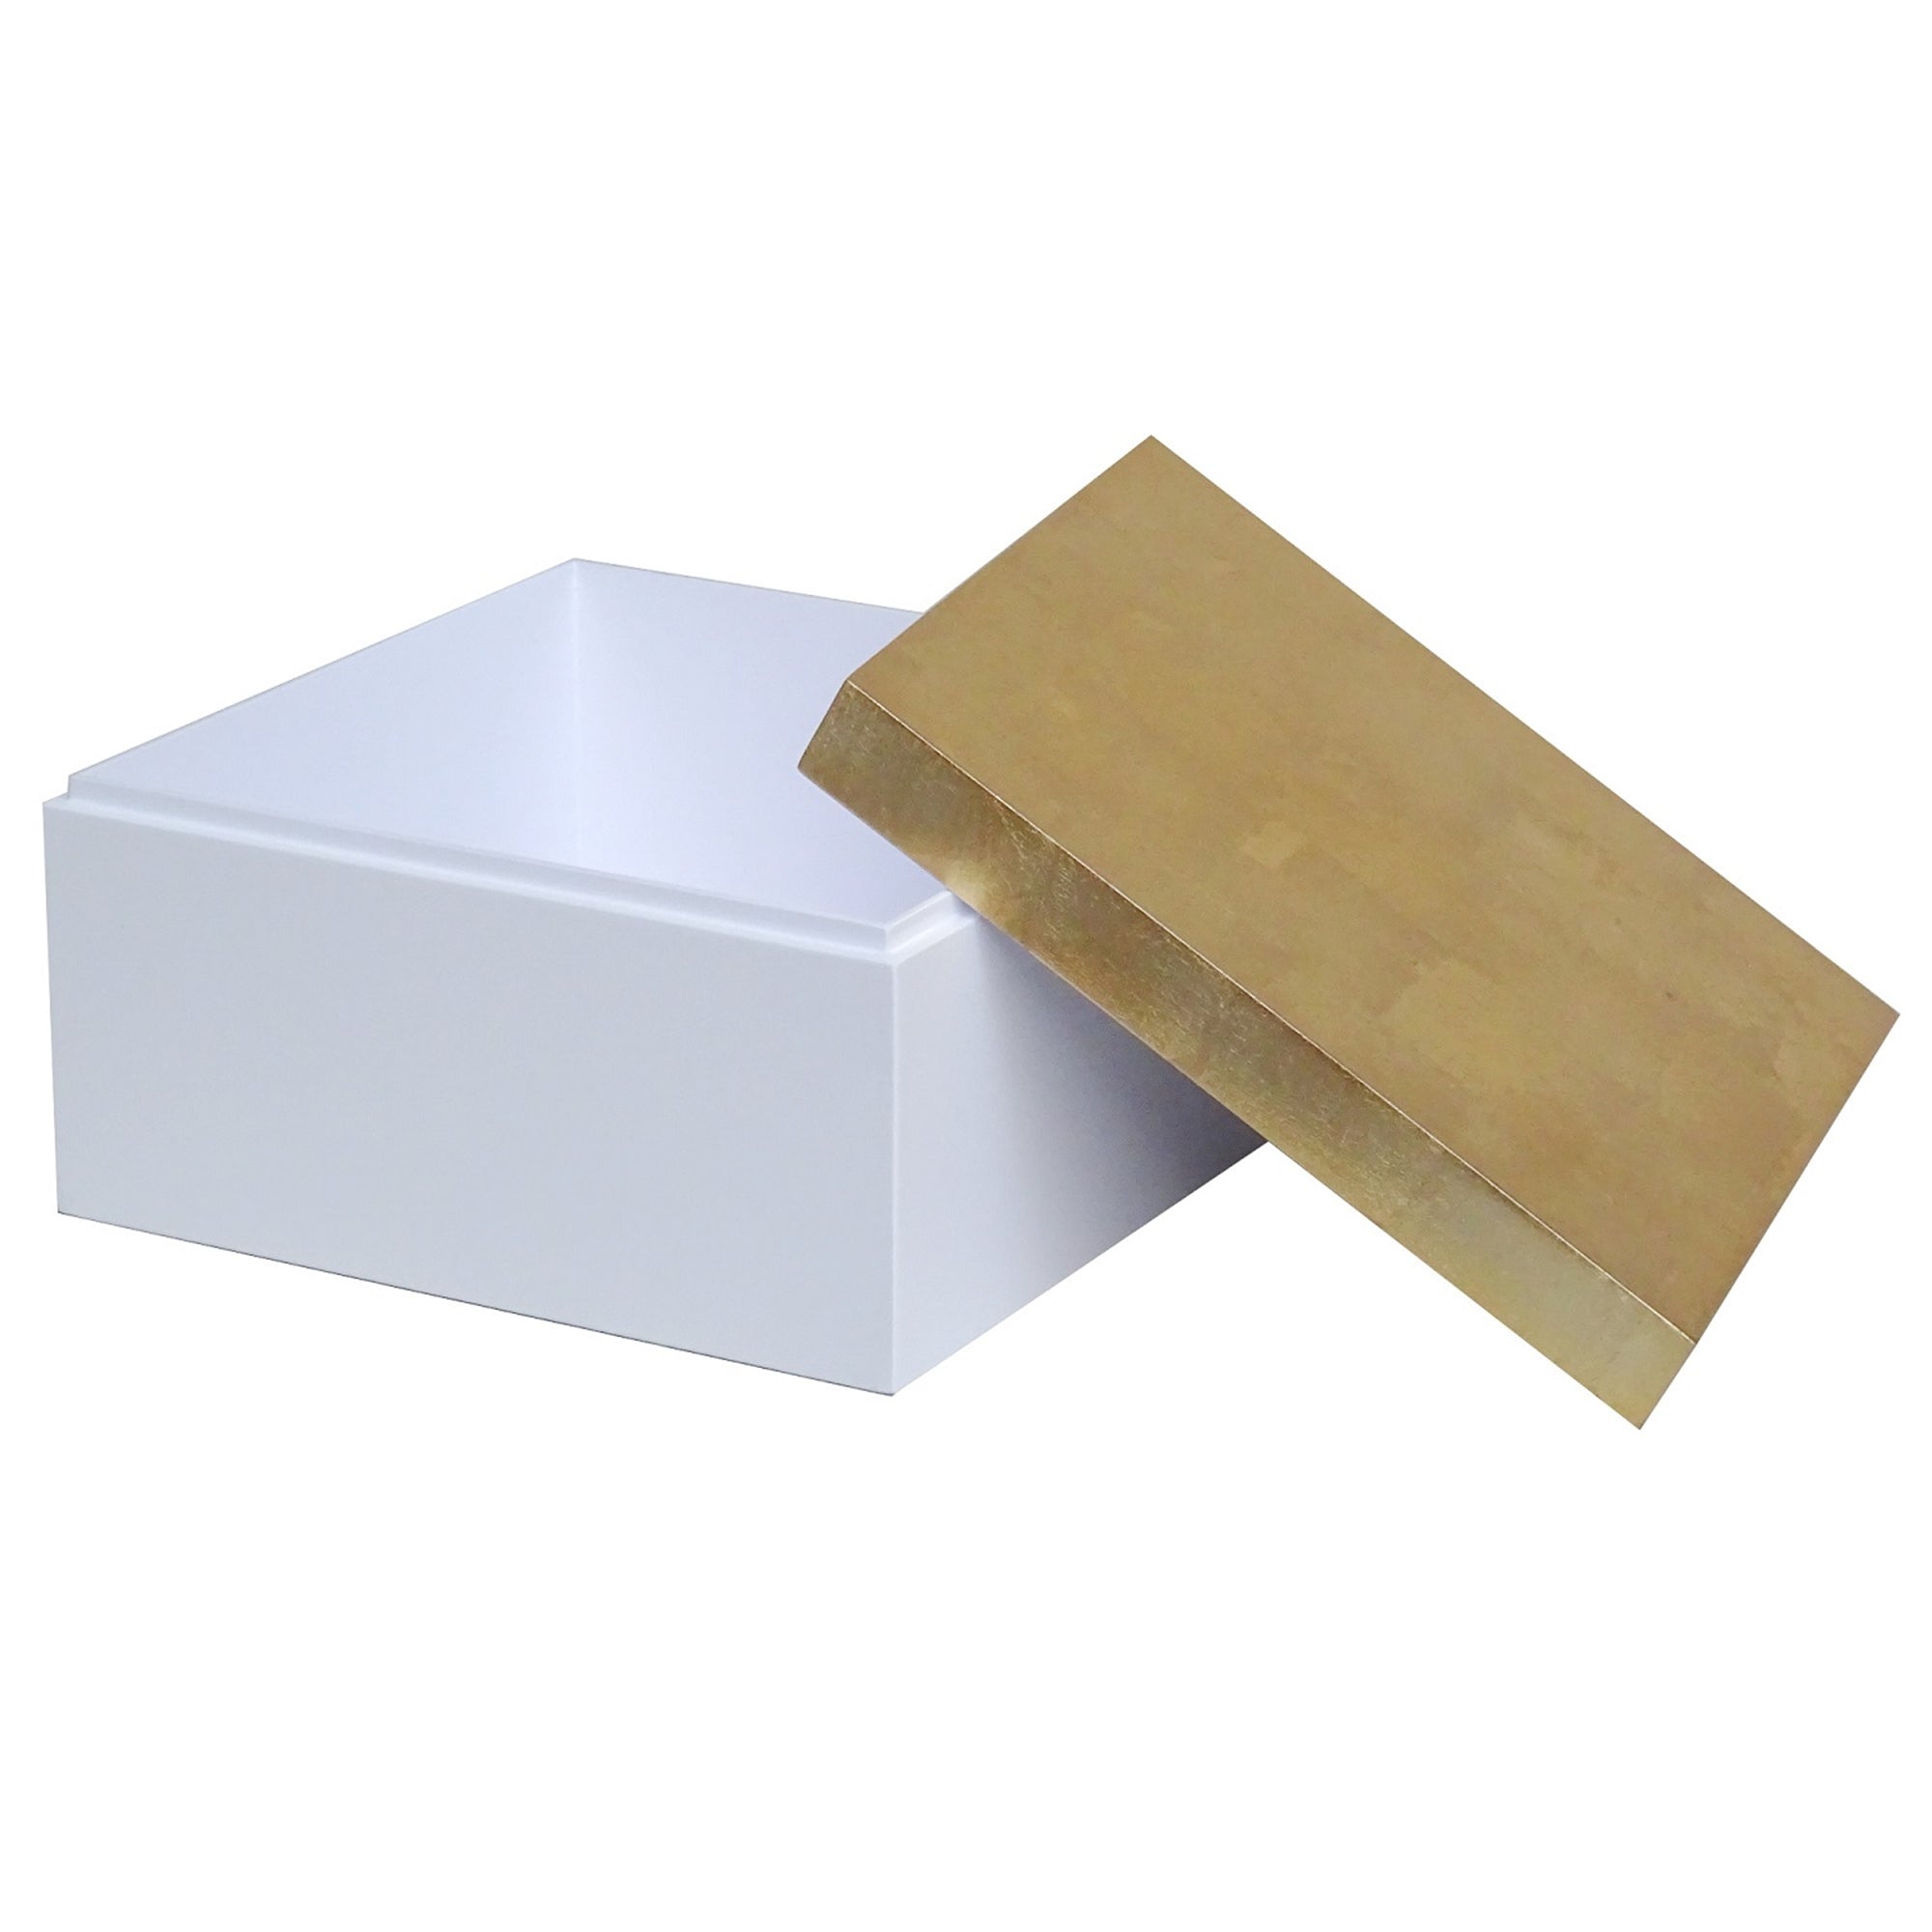 Sm. Square Box w/ Gold Leaf Lacquer Lid